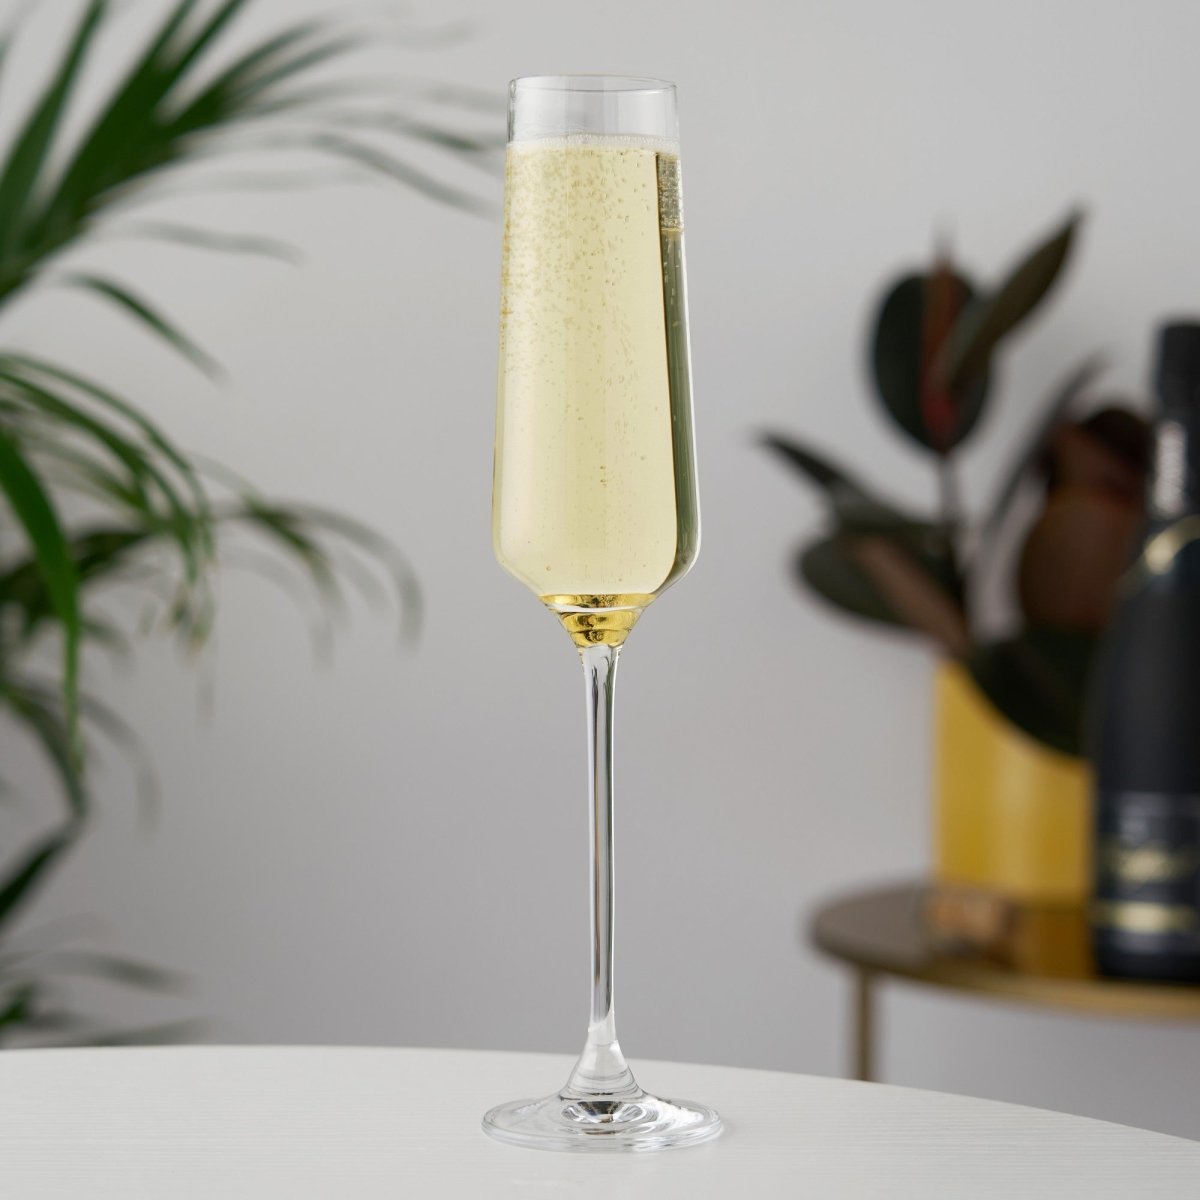 Viski European Crystal Champagne Flutes, Set of 4 - lily & onyx